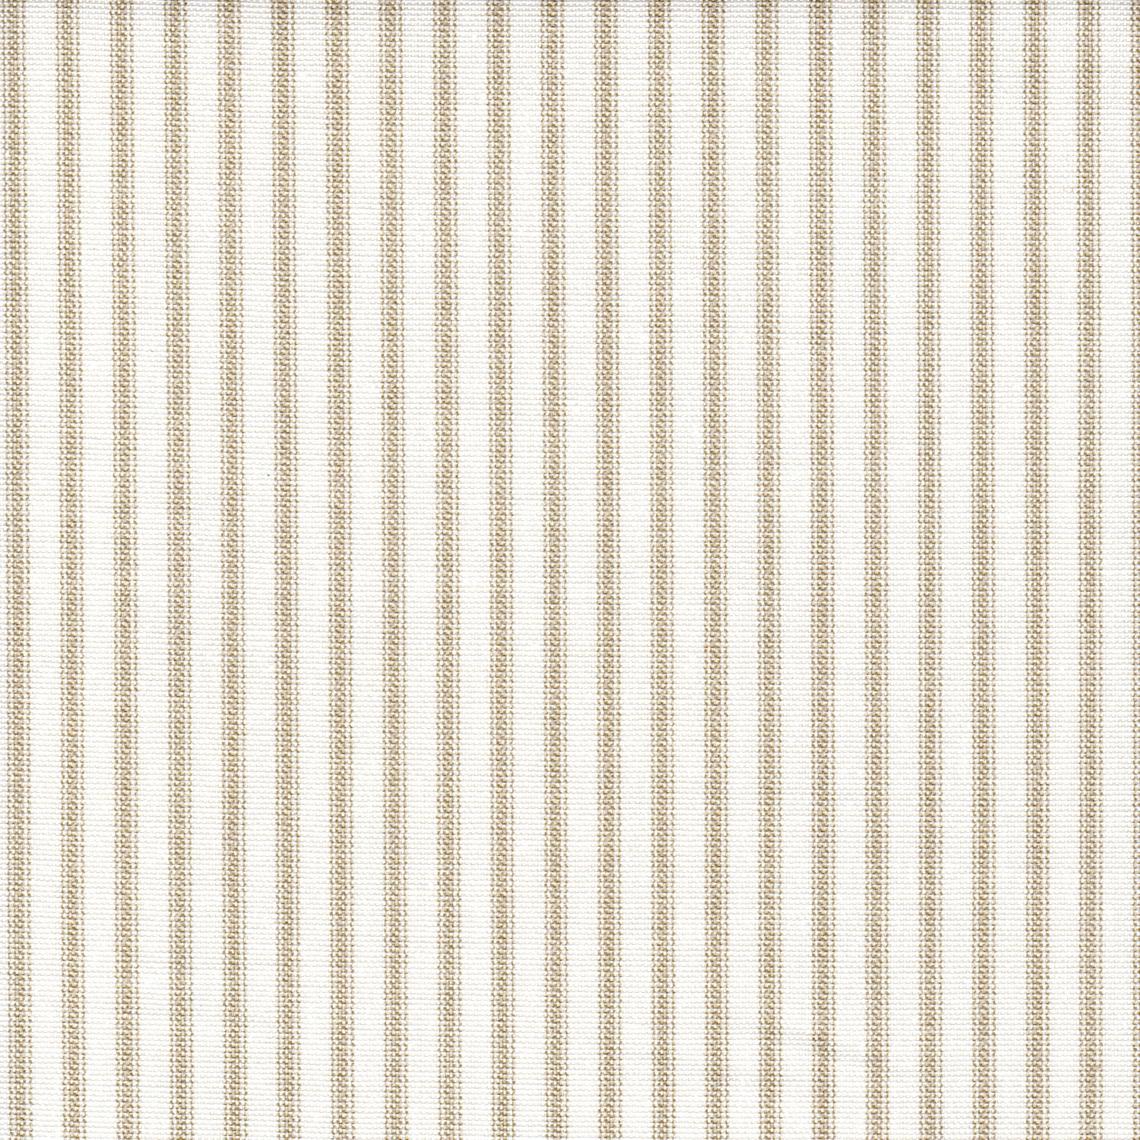 duvet cover in farmhouse sand beige traditional ticking stripe